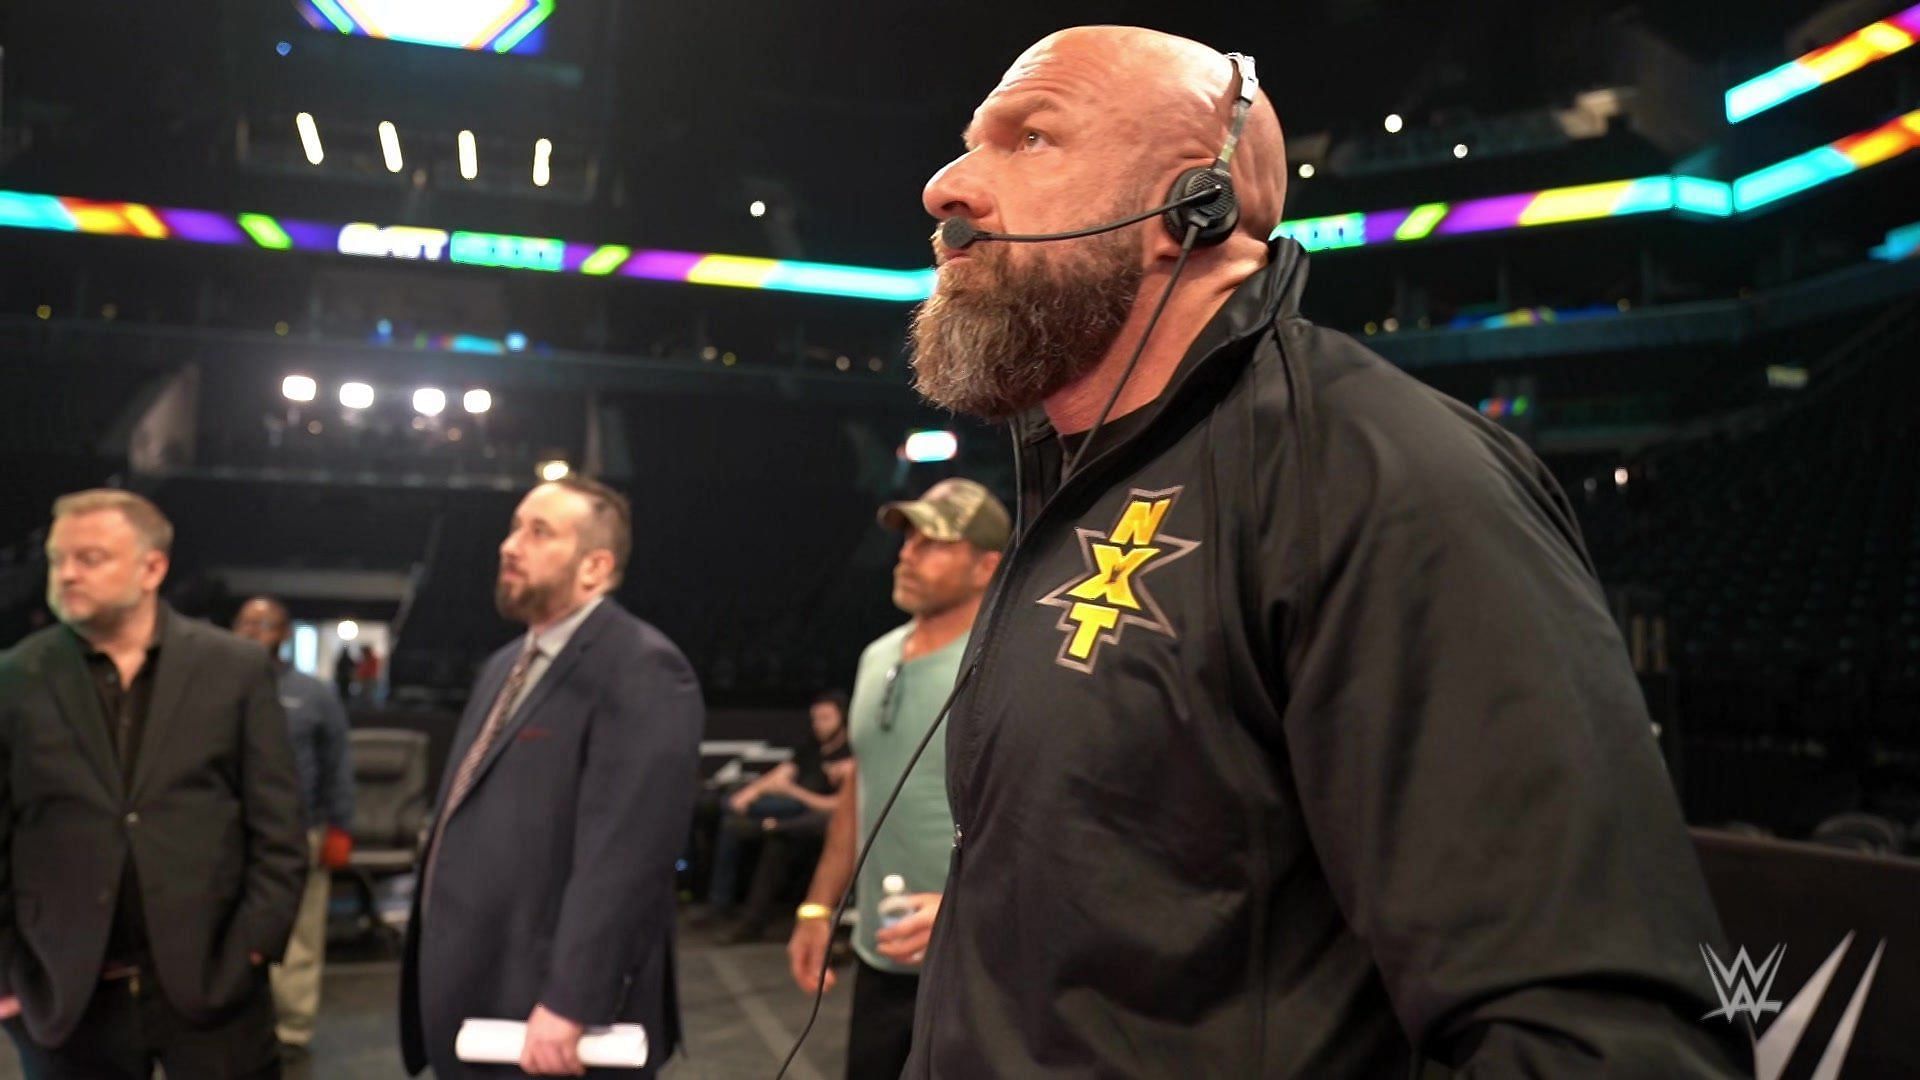 Triple H producing NXT